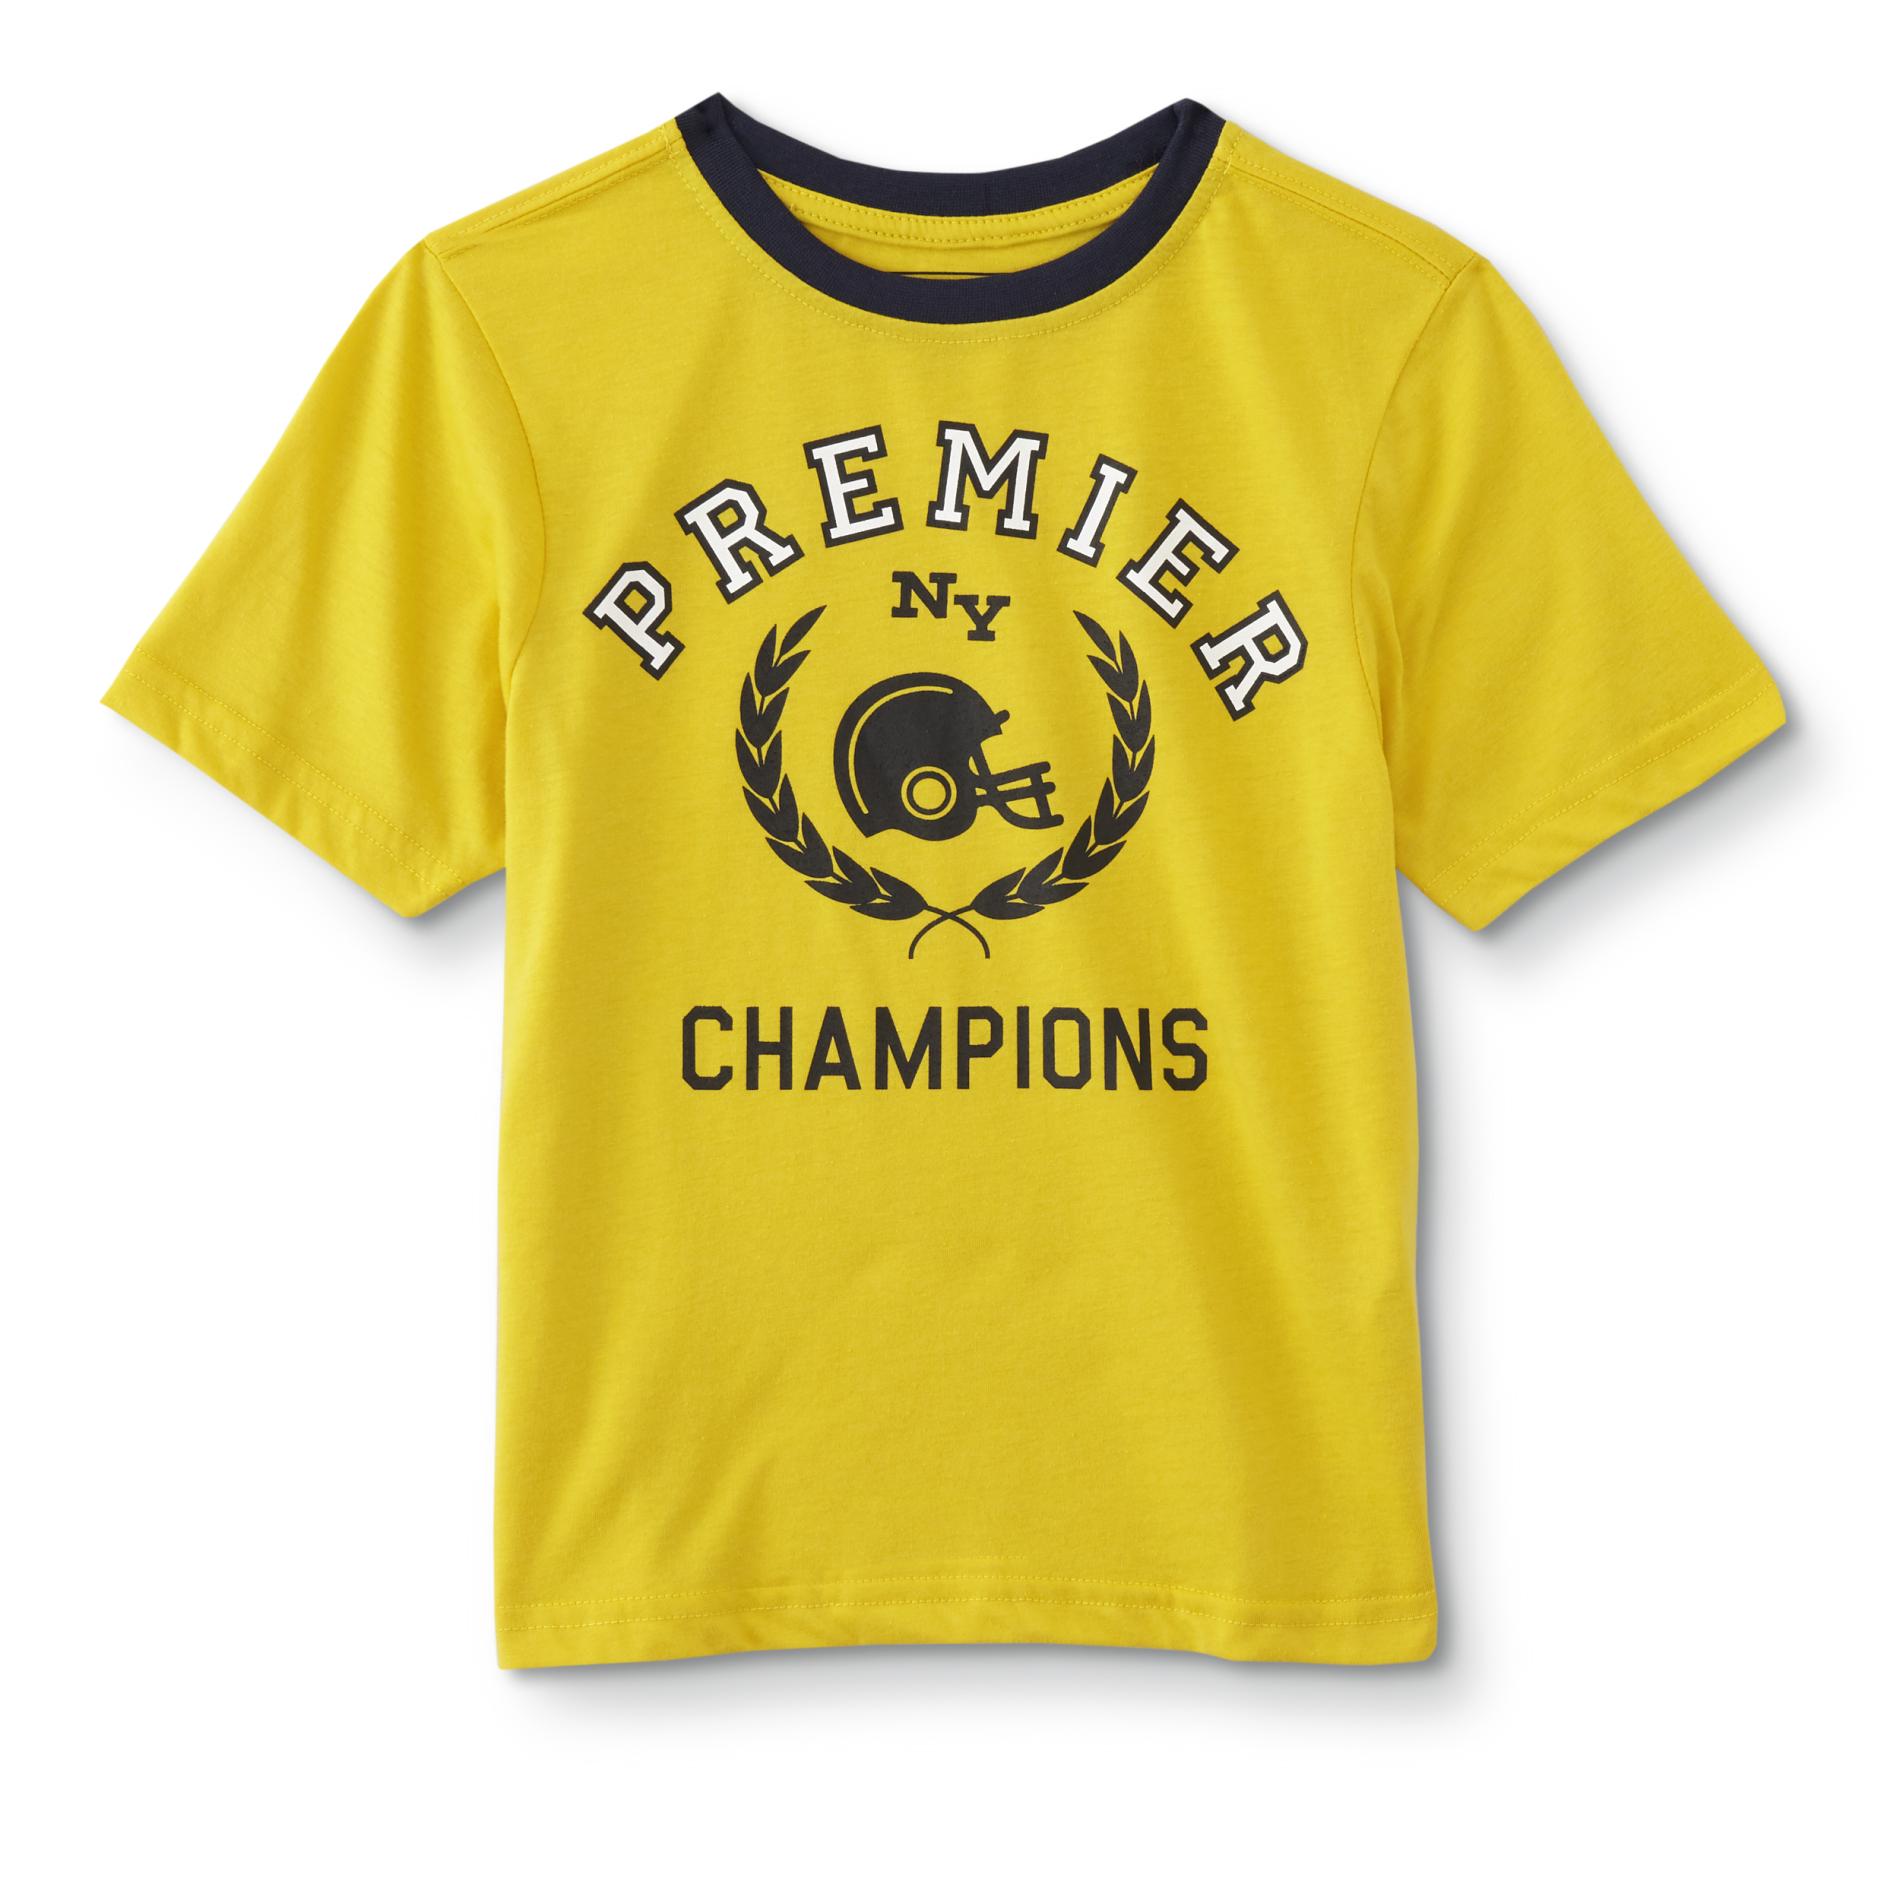 Montage Boys' Graphic T-Shirt - Premier Champions